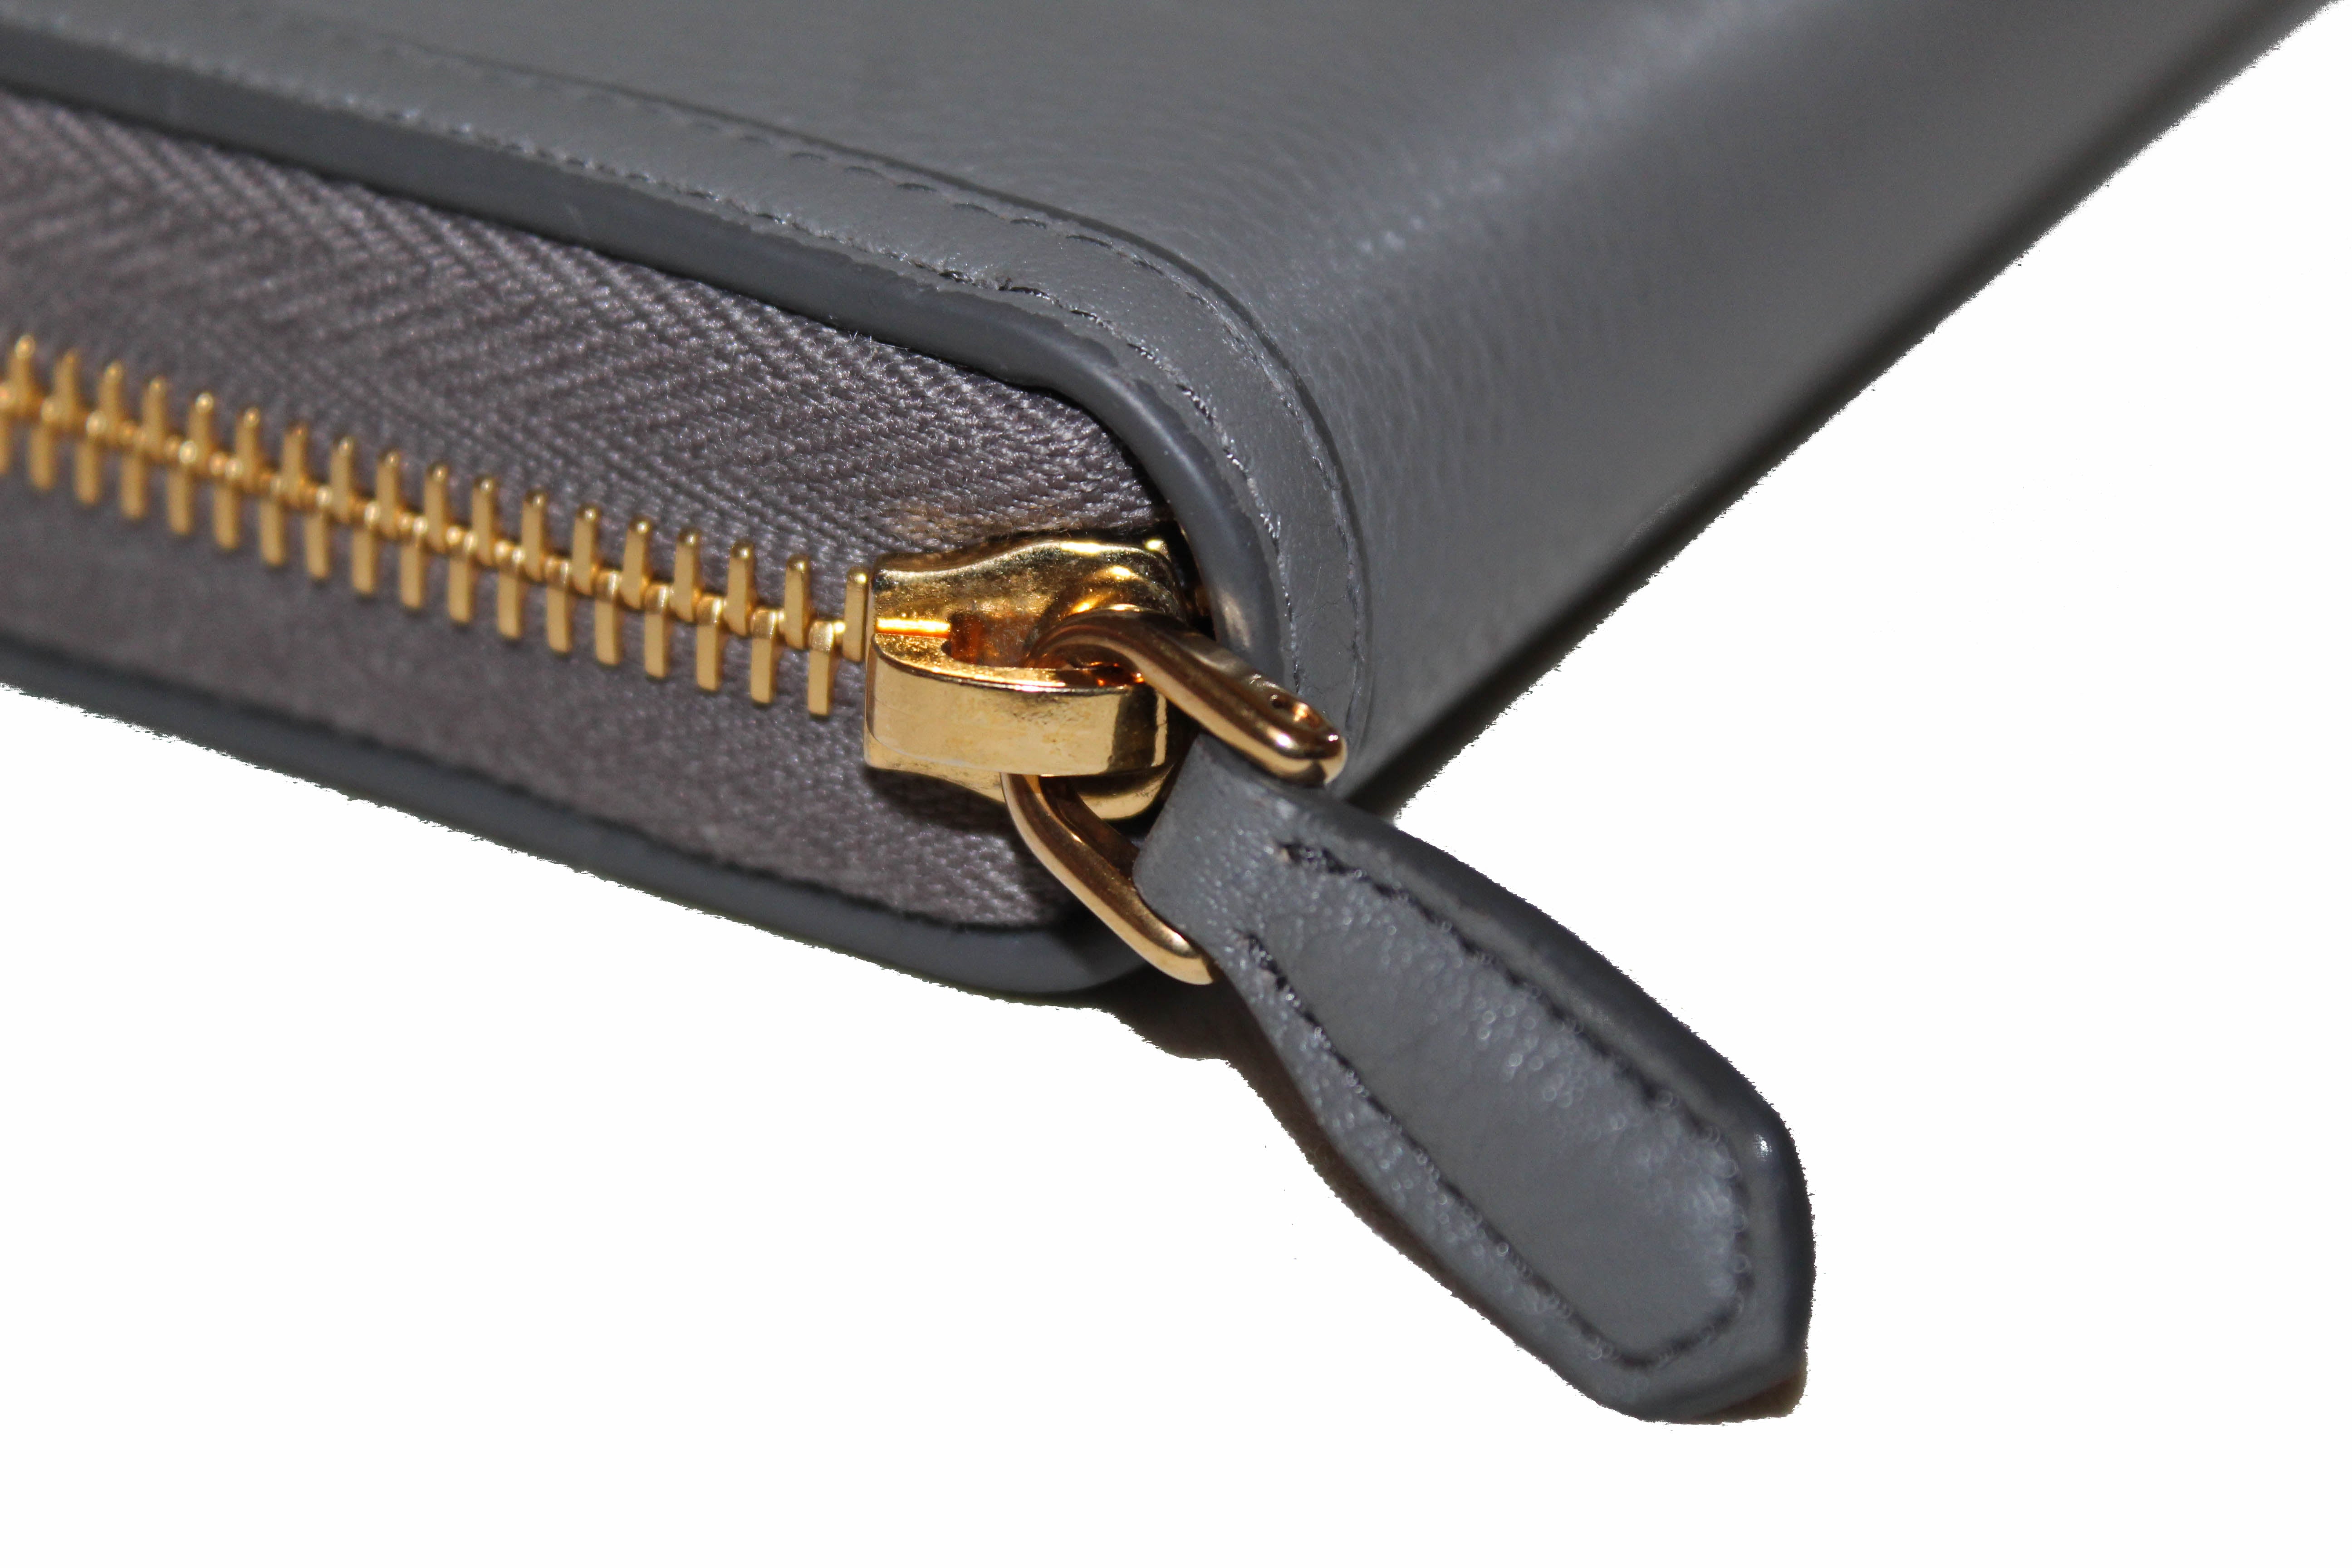 Prada bow cardholder wallet - Gem